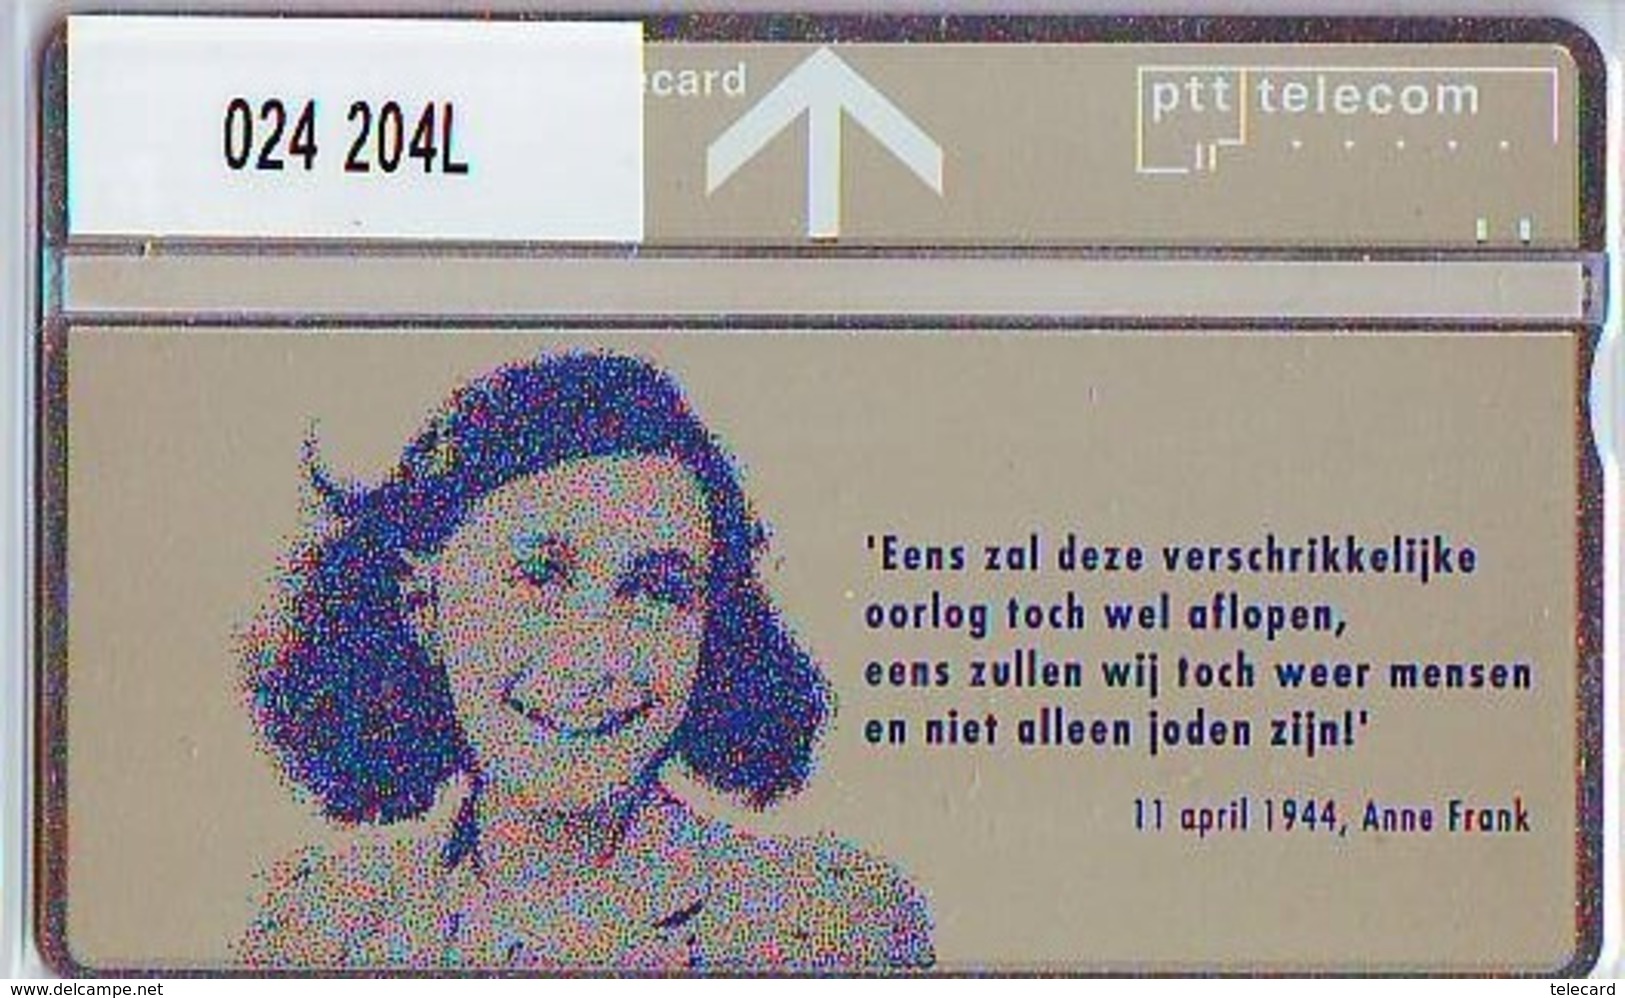 Telefoonkaart * ANNE FRANK * LANDIS&GYR * NEDERLAND *  R-024 * 204L *  Niederlande Prive Private  ONGEBRUIKT * MINT - Privé